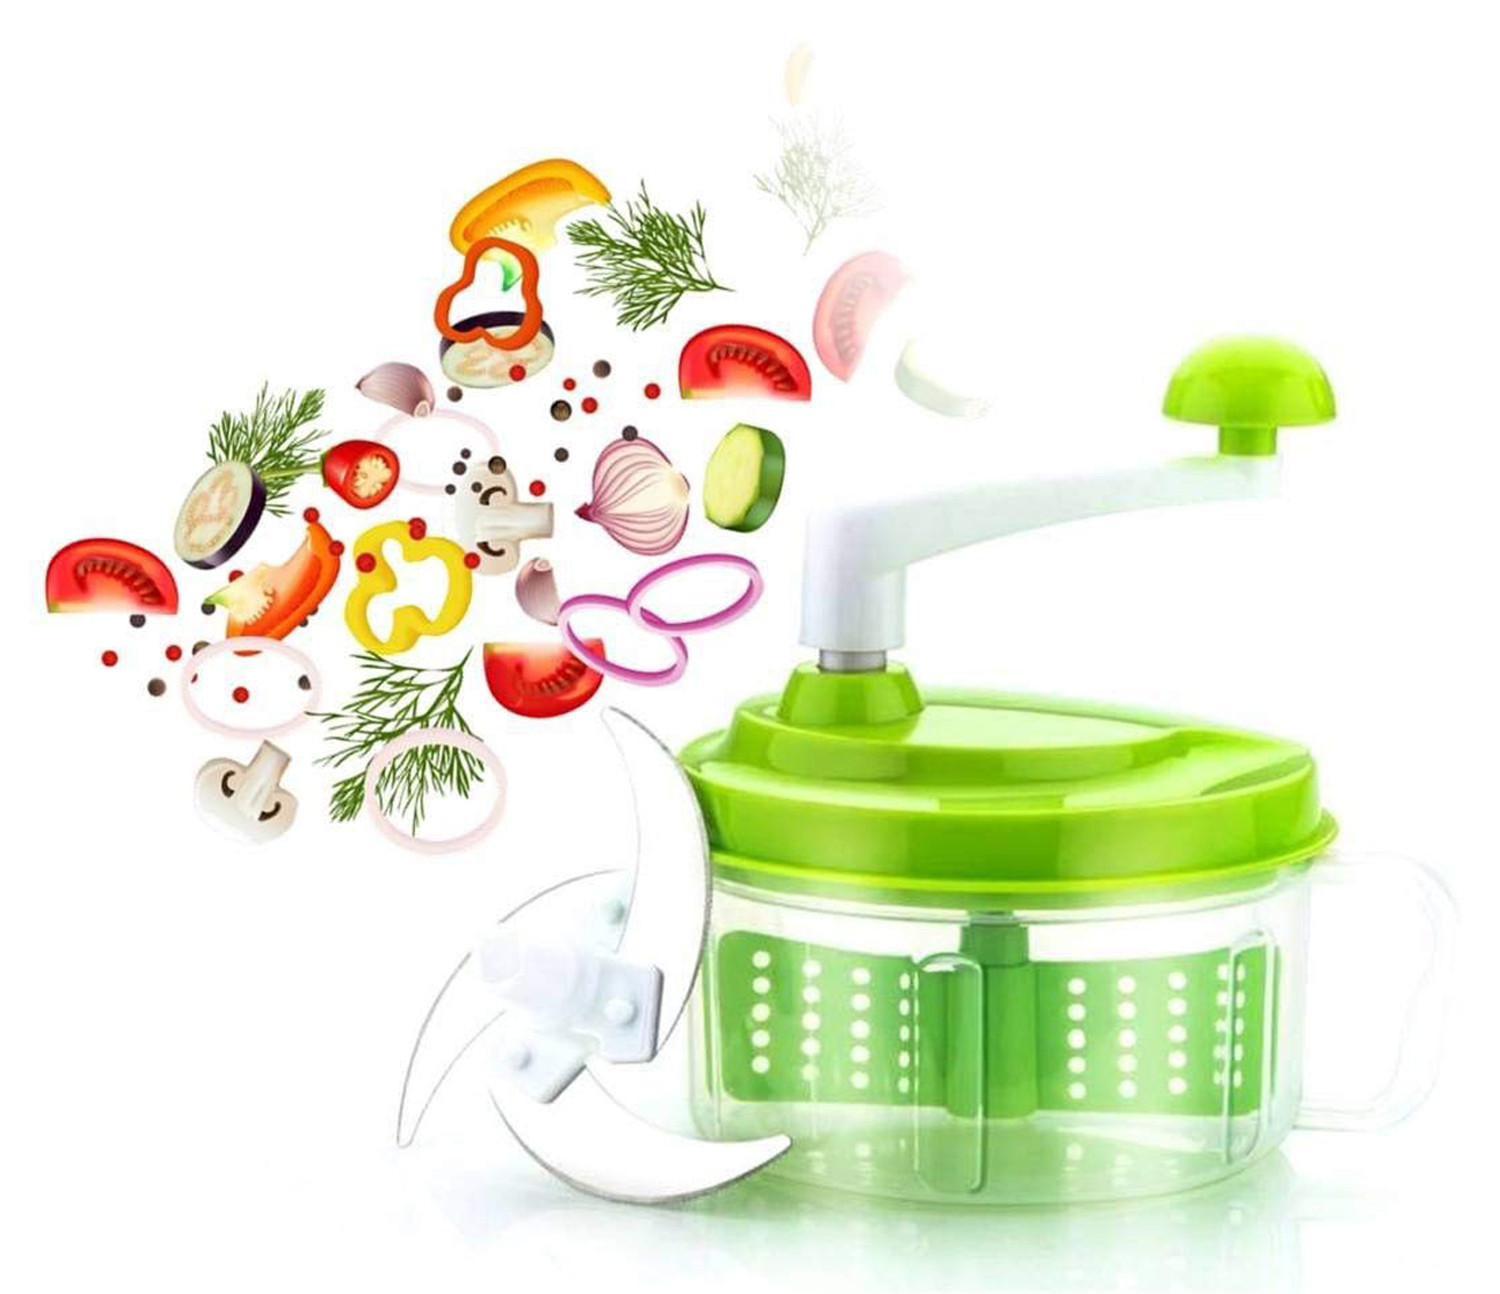 Kuber Industries Plastic ChopNchurn/ 2 in 1 Vegetable and Fruit Chopper with Beating Blade,Churner,Grater, Slicer /Lassi Maker,Green